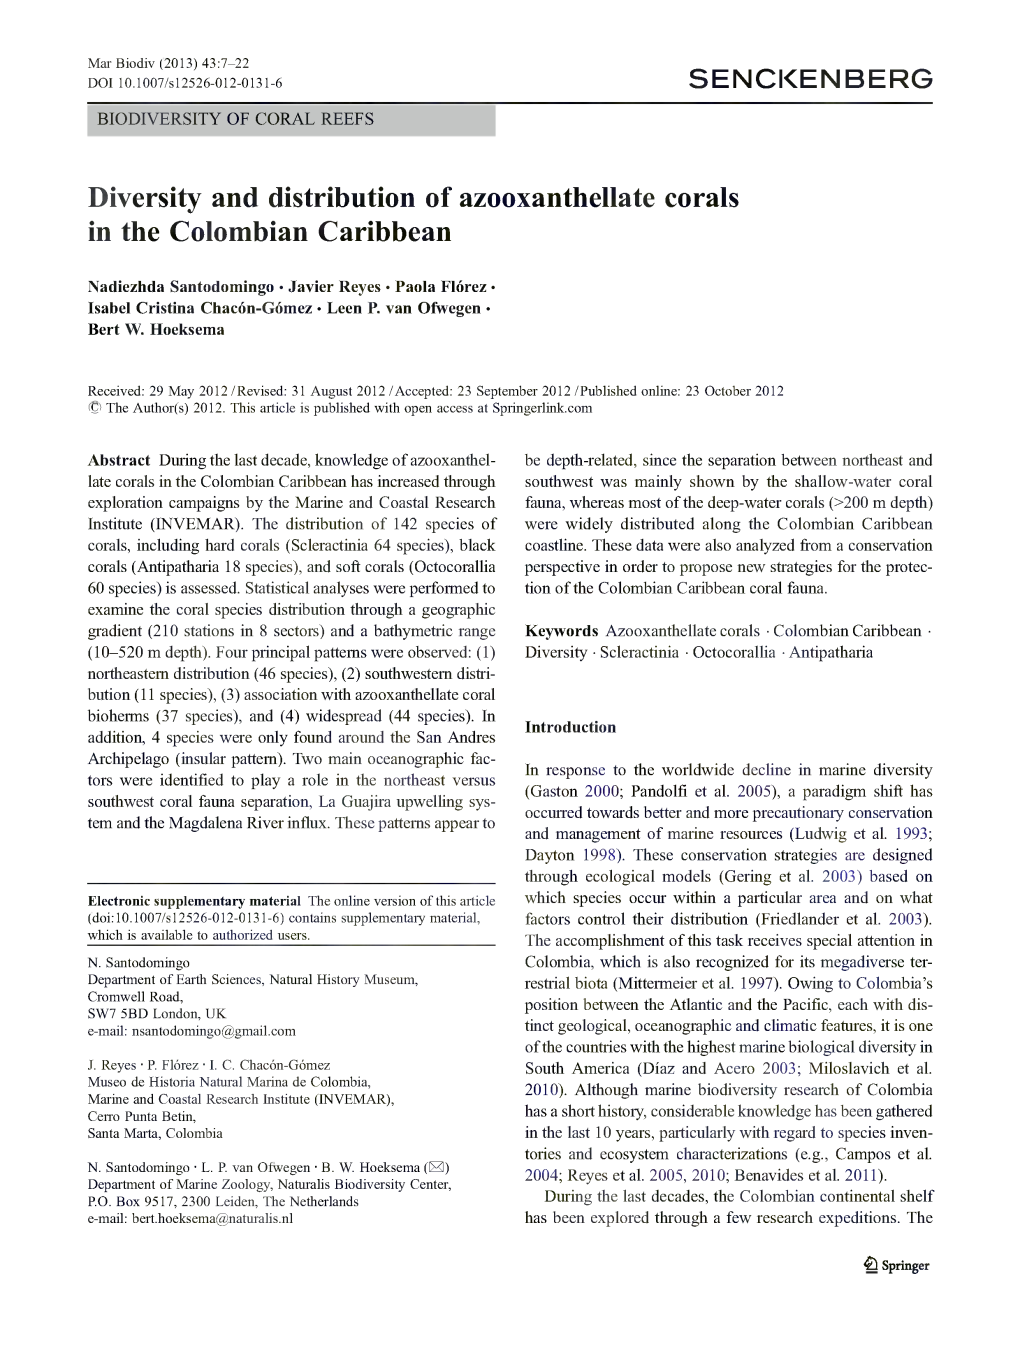 SENCKENBERG Diversity and Distribution of Azooxanthellate